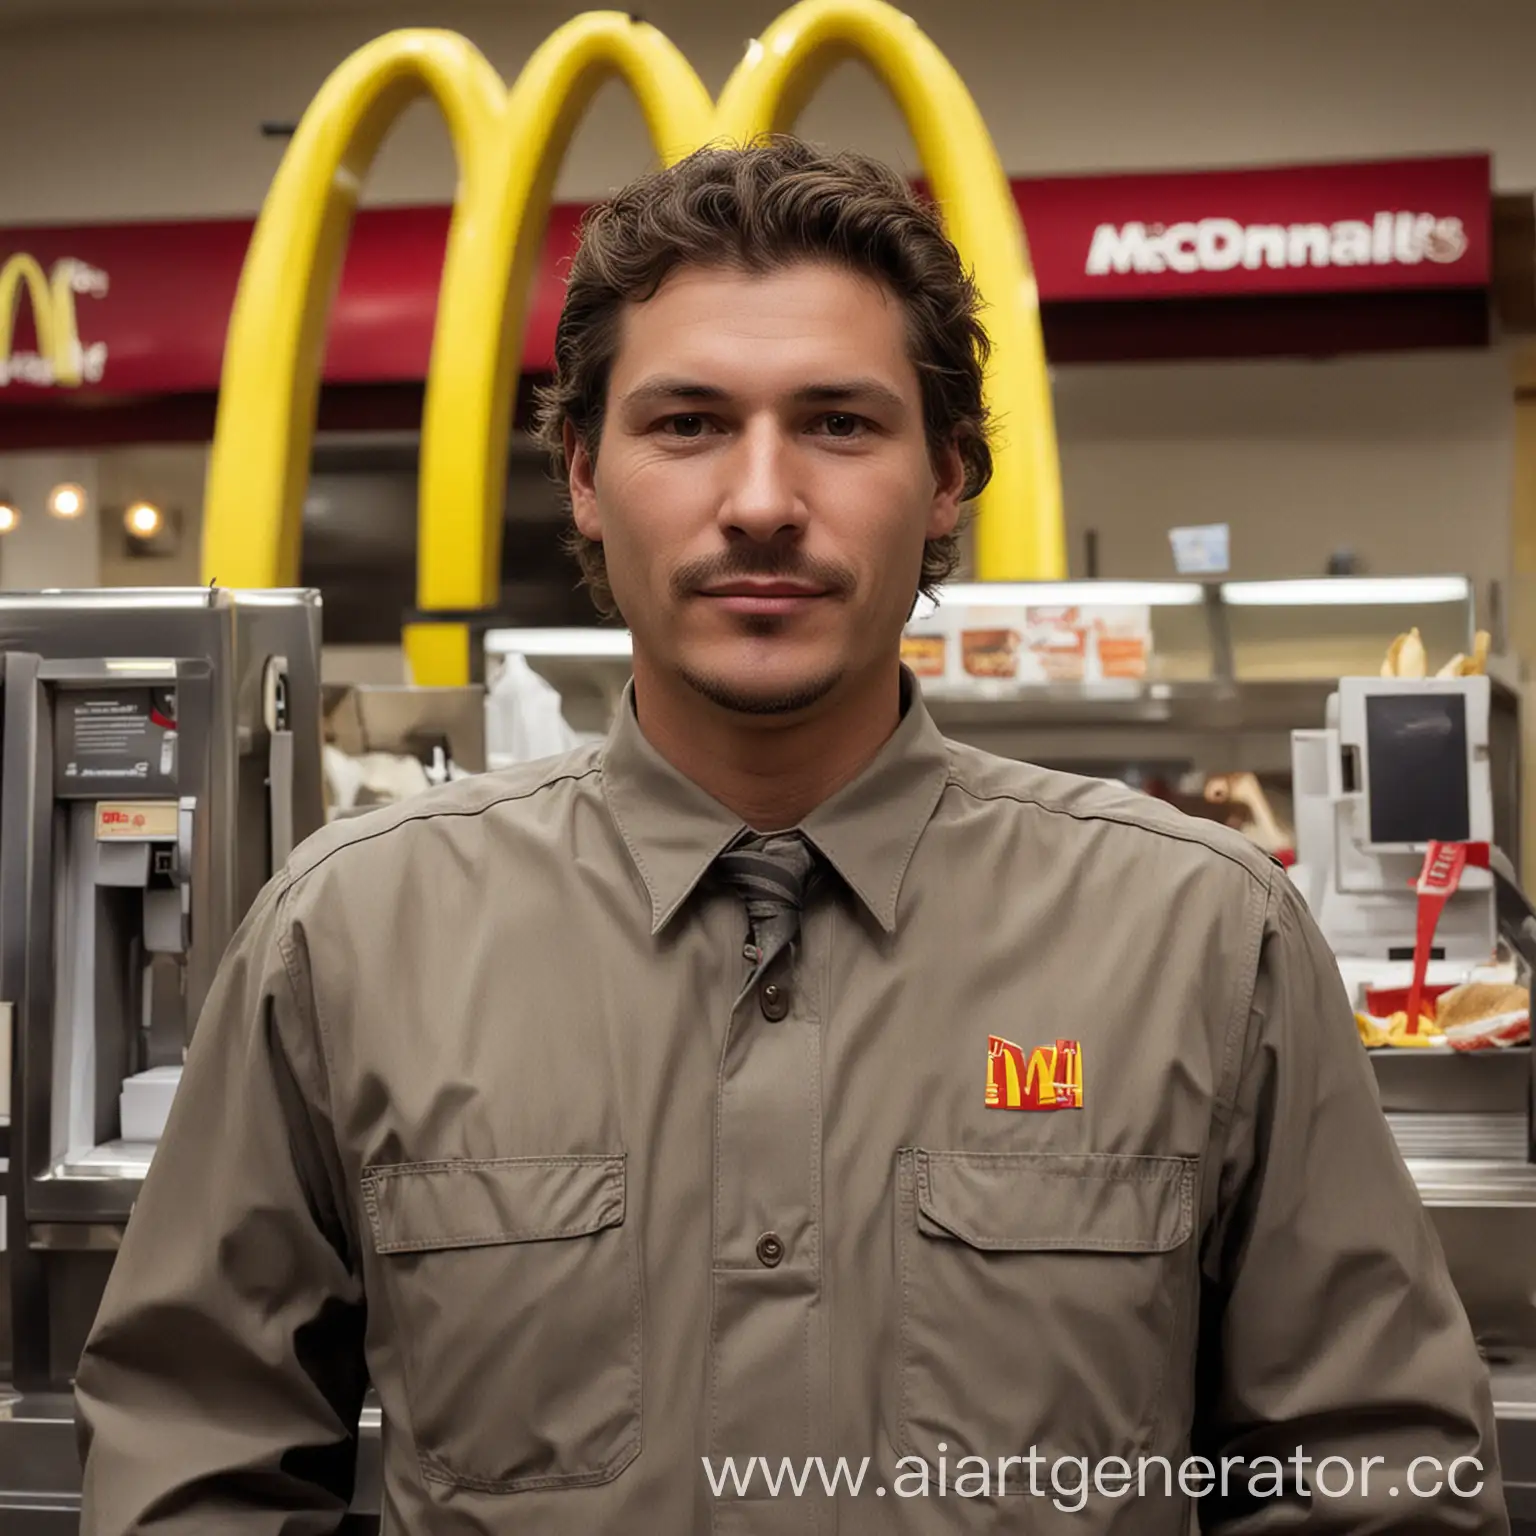 Worker McDonalds man